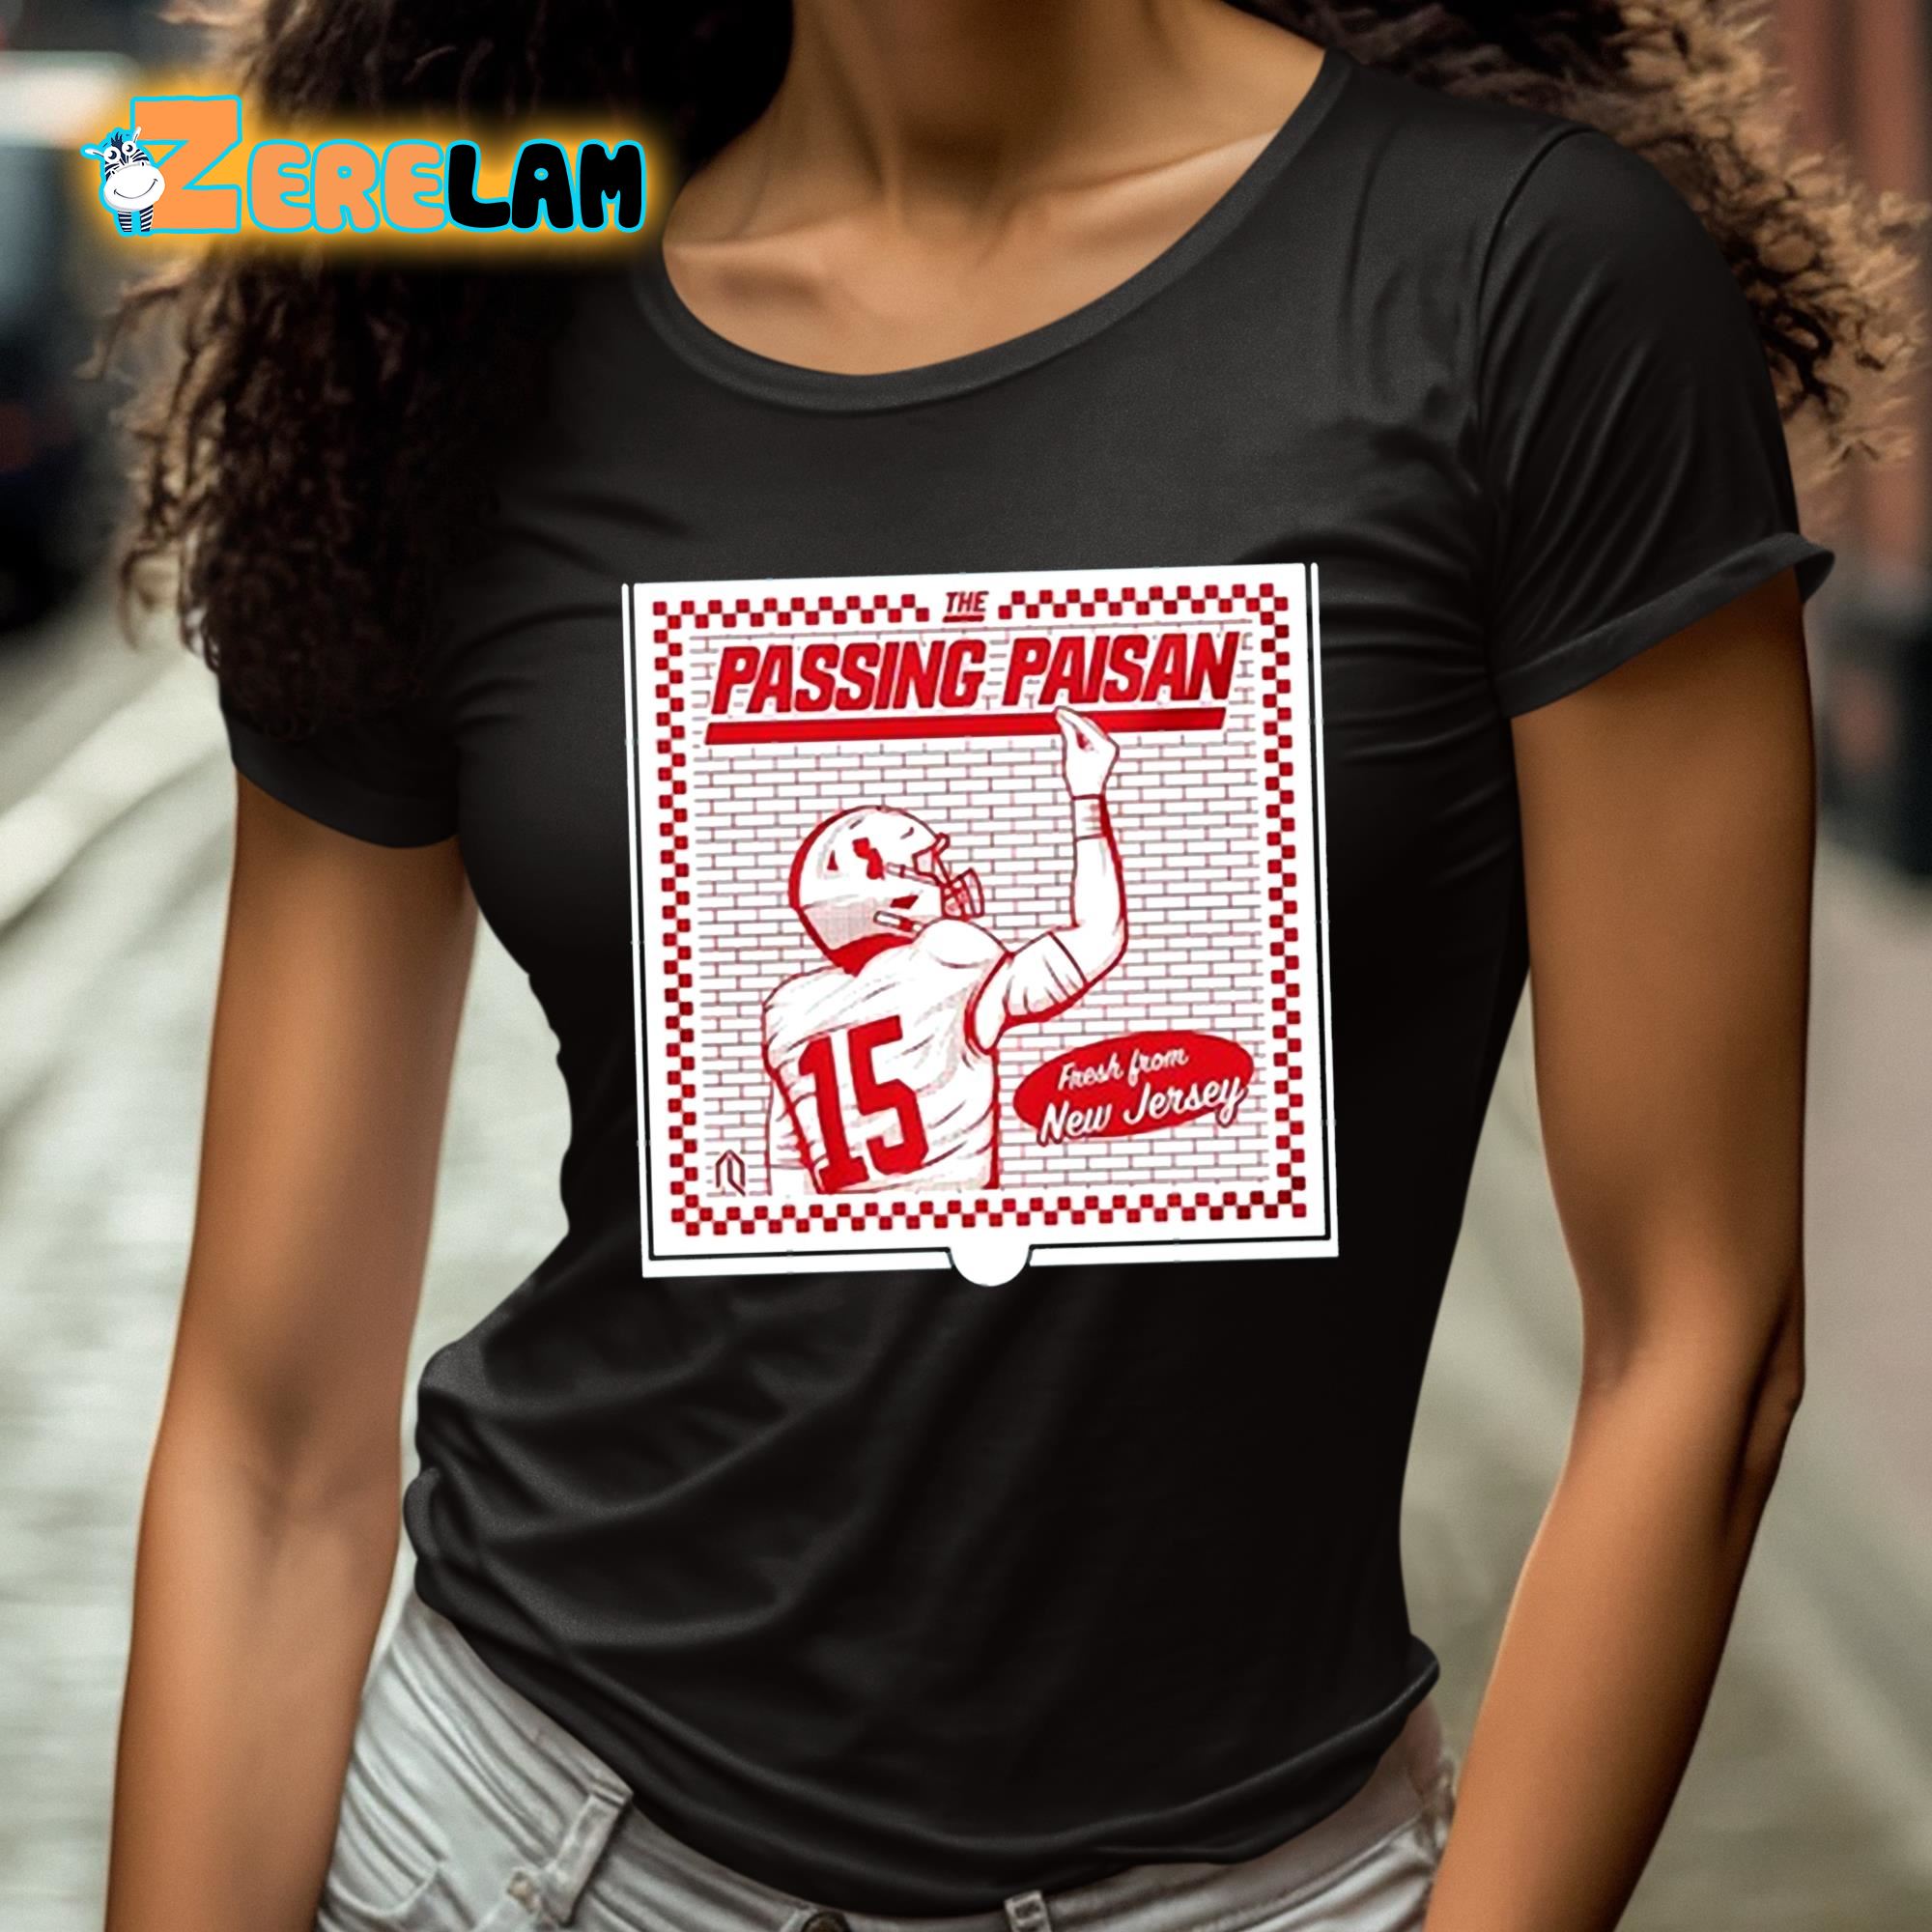 The-Passing-Paisan-Shirt_4_1.jpg